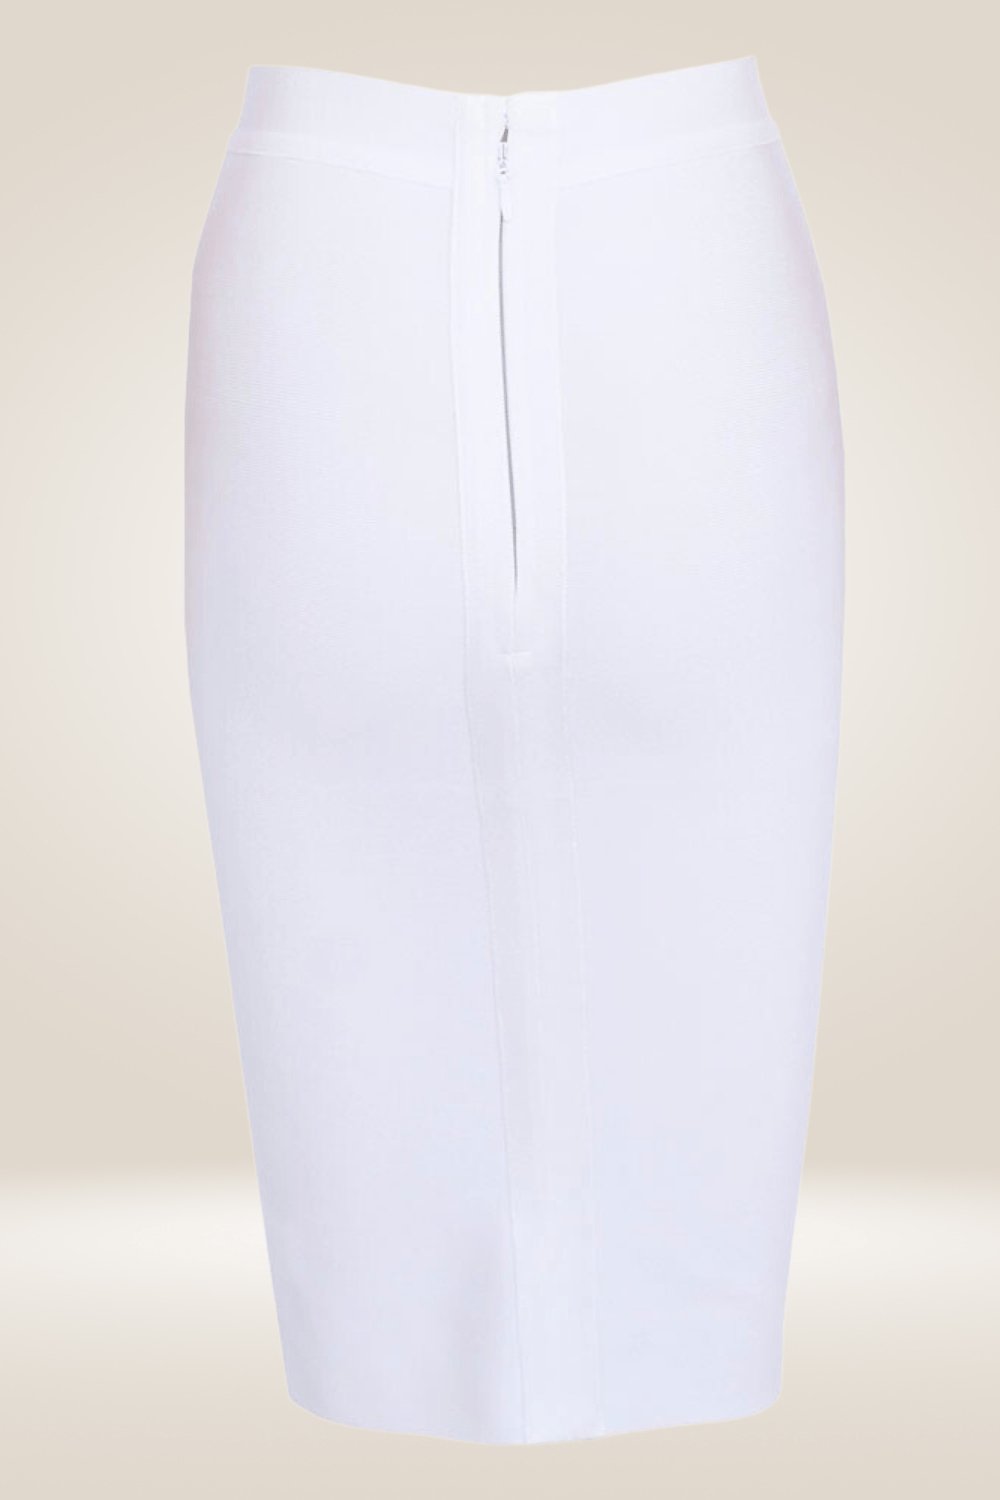 High Waisted White Pencil Skirt - TGC Boutique - Skirt